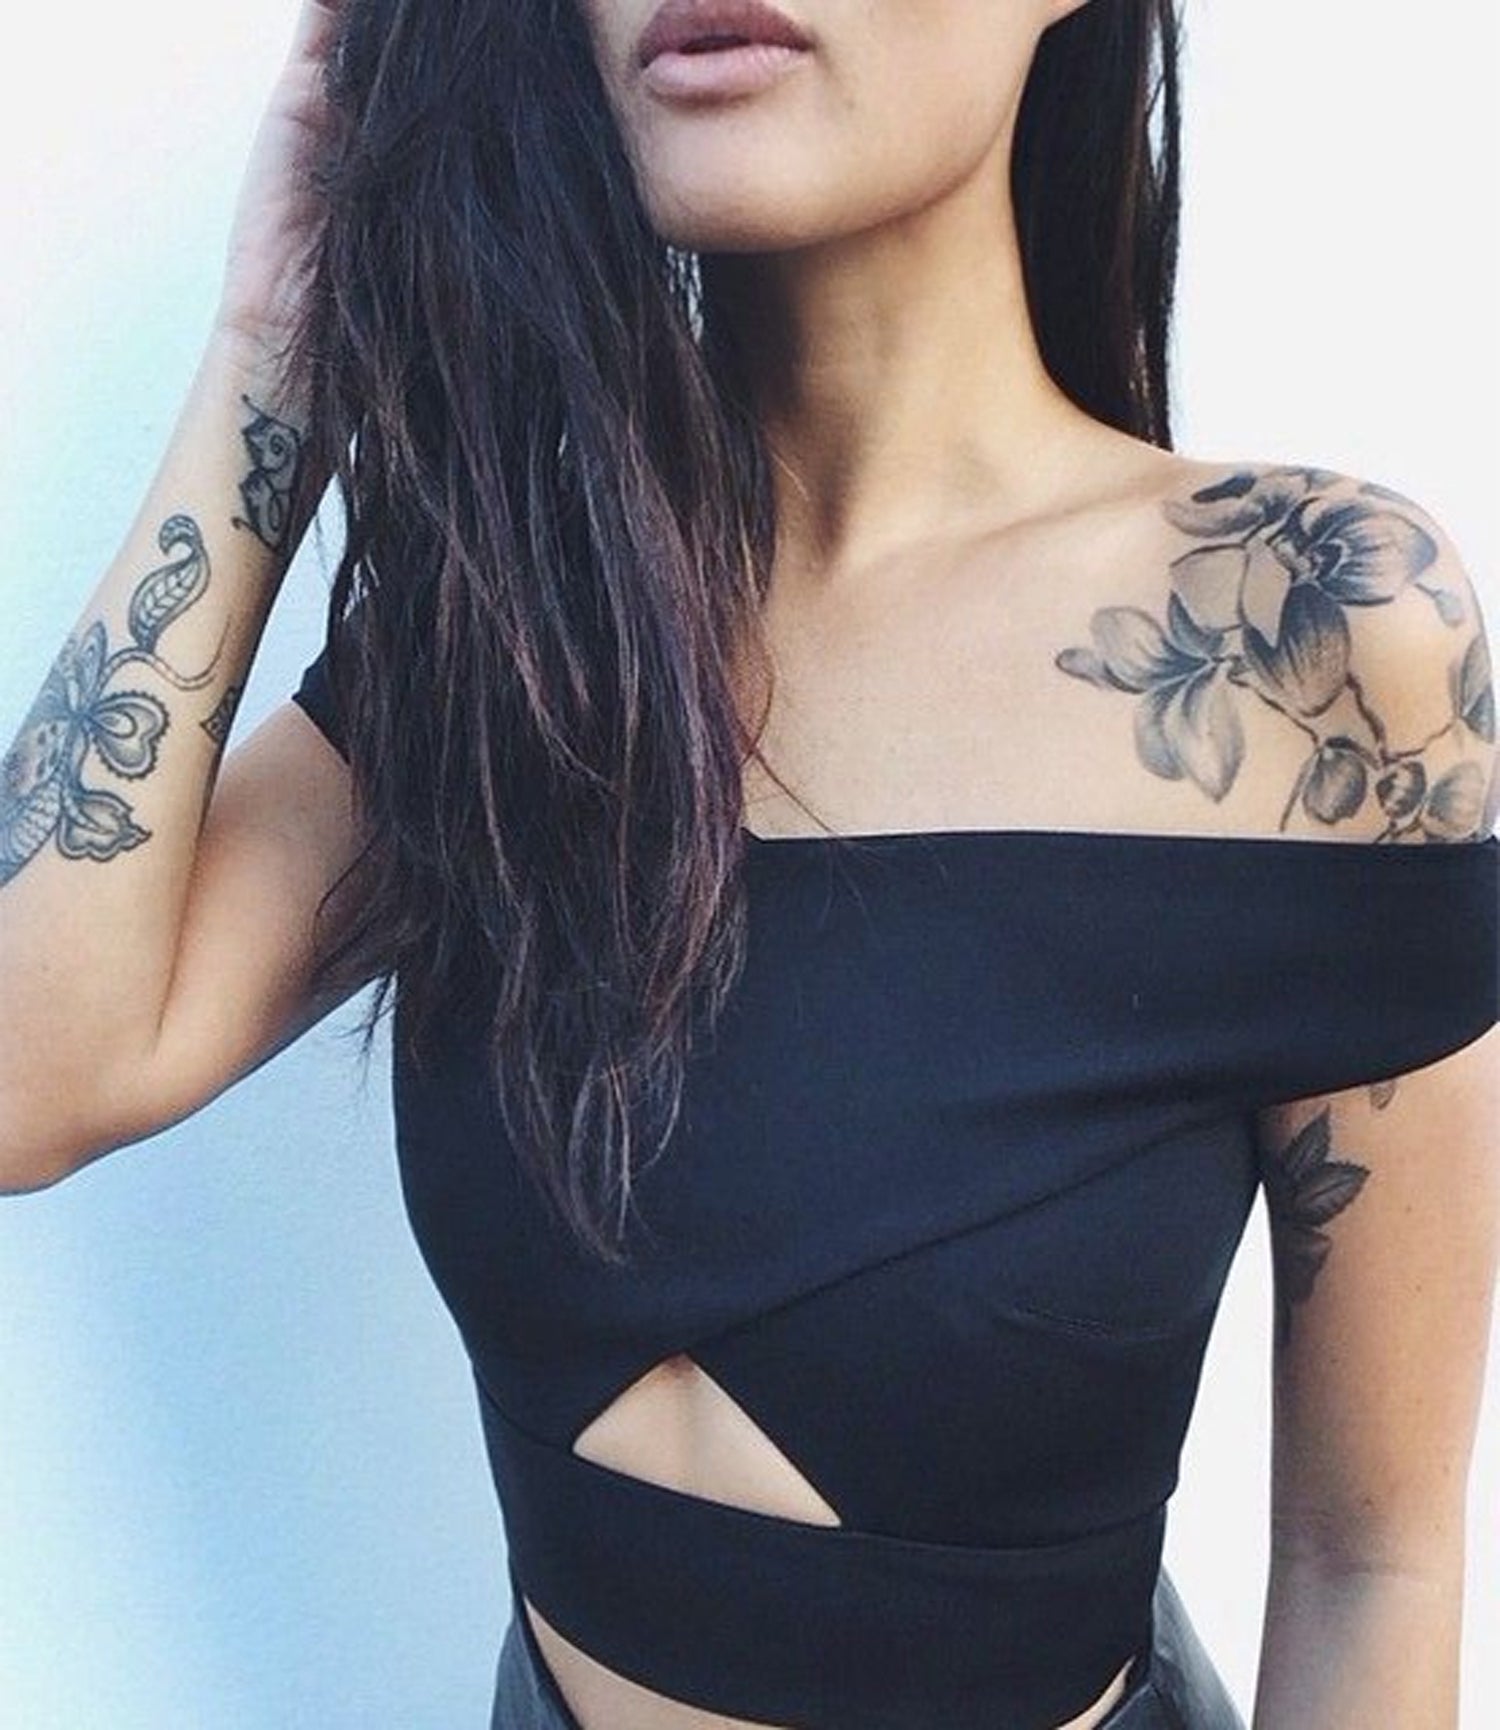 Black Watercolor Flower Shoulder Tattoo Ideas for Women - Floral Arm Sleeve Tatt - MyBodiArt.com